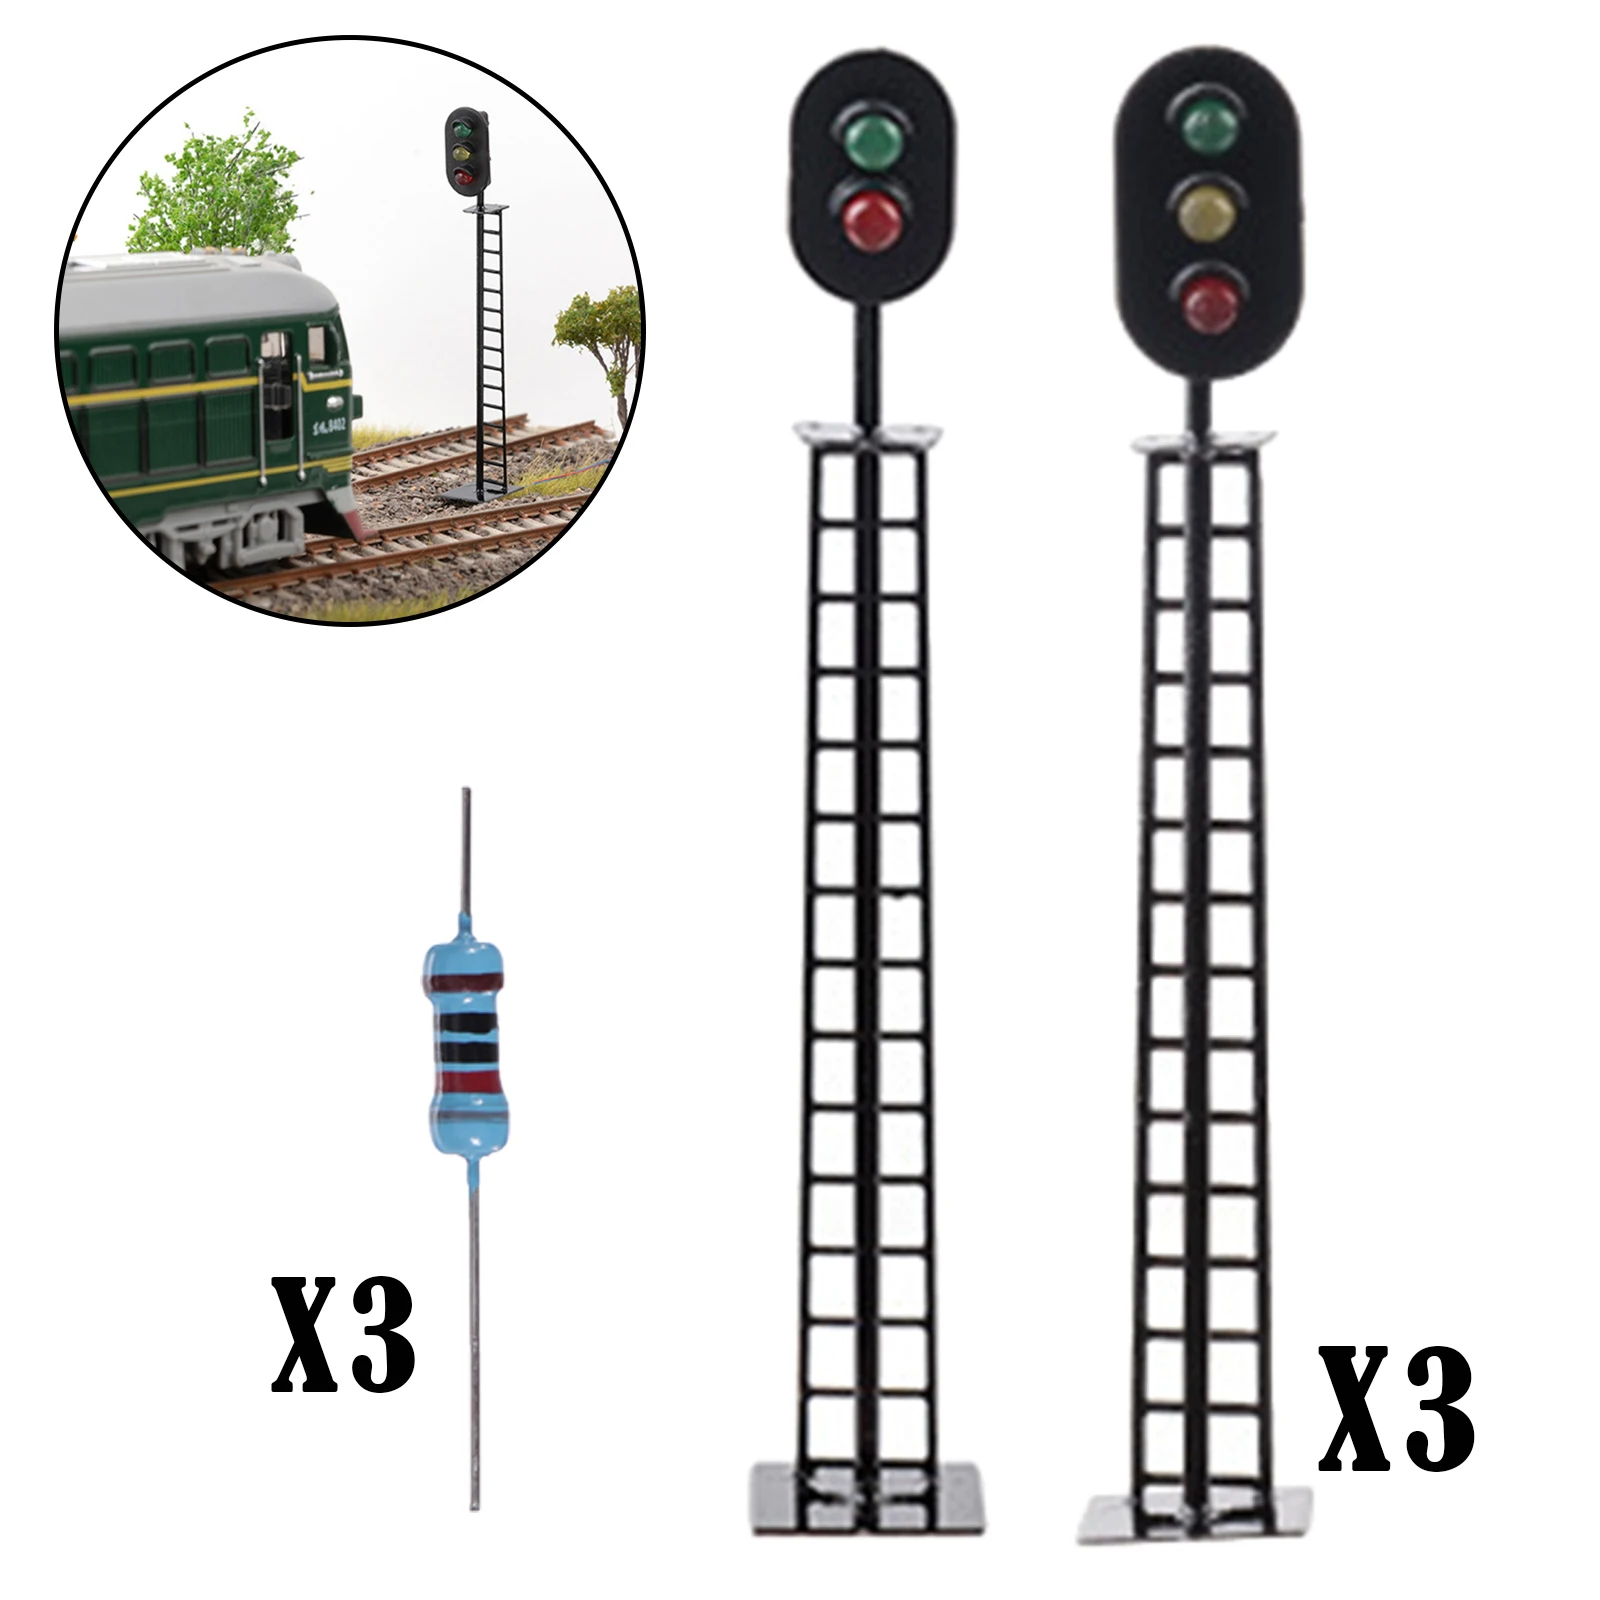 3PCS Model Railroad Train Signals Light Traffic Lights for Train Layout